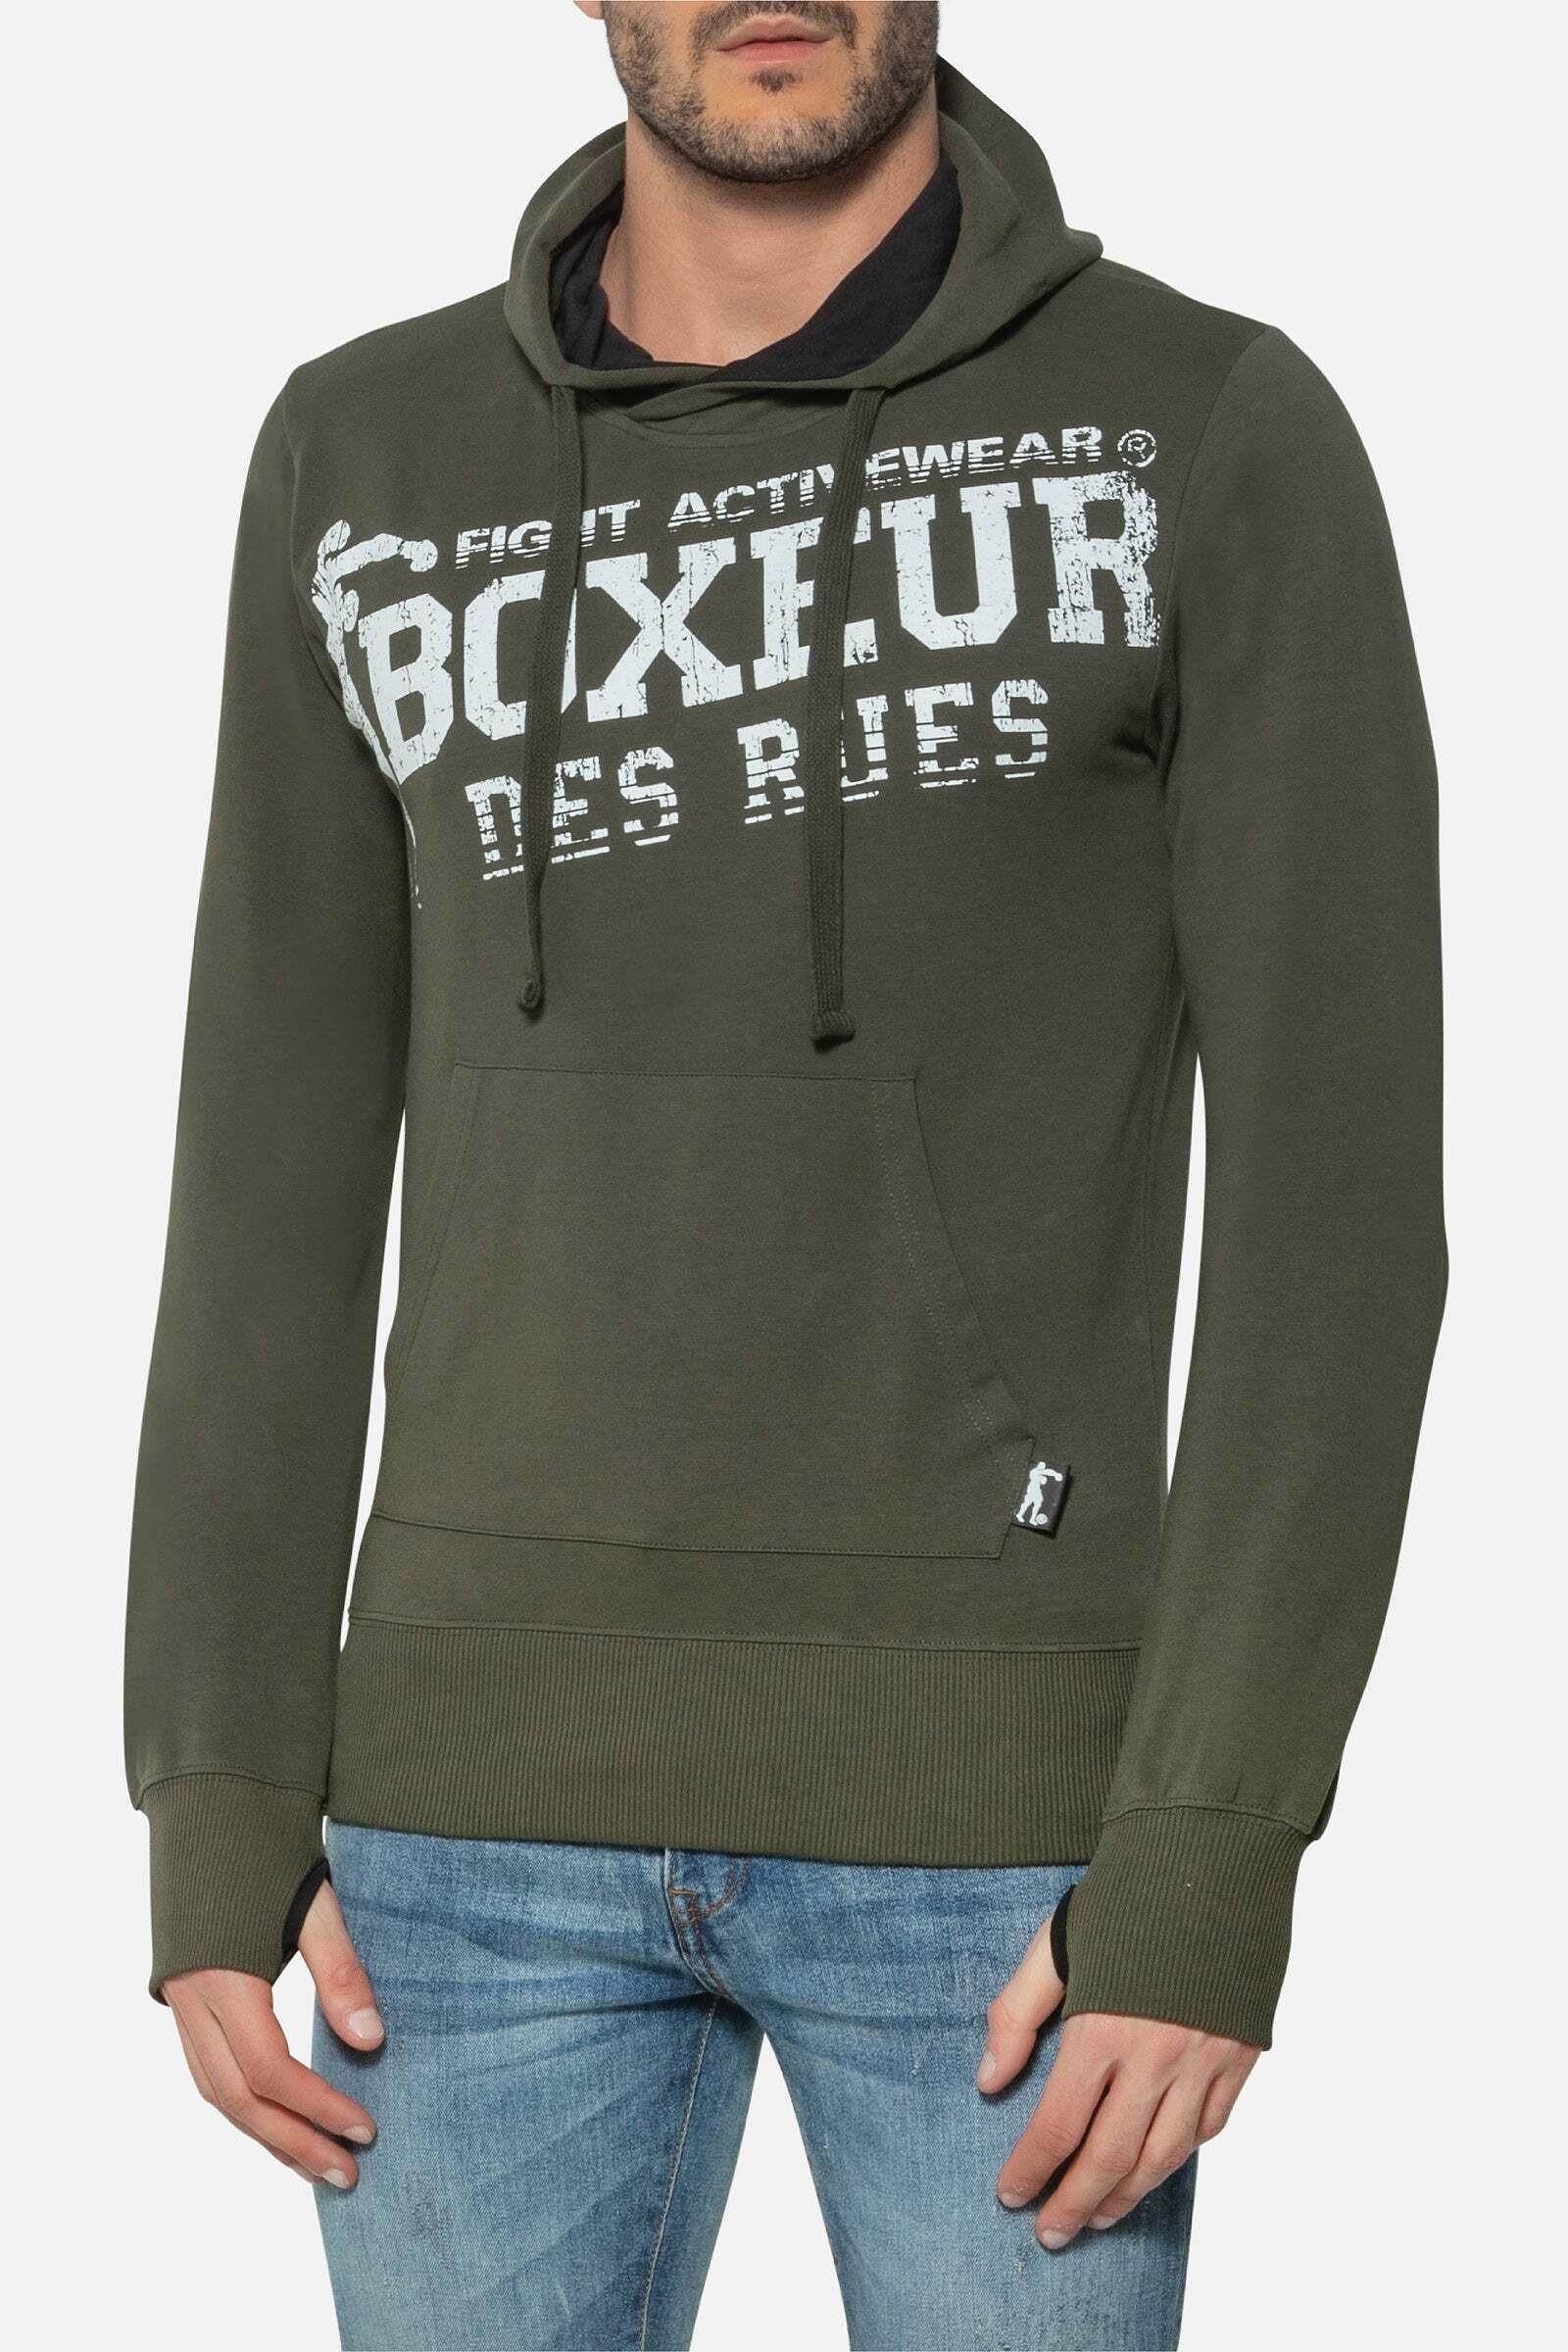 Kapuzenpullover Hooded Sweatshirt With Thumb Openings Herren Grün M von BOXEUR DES RUES